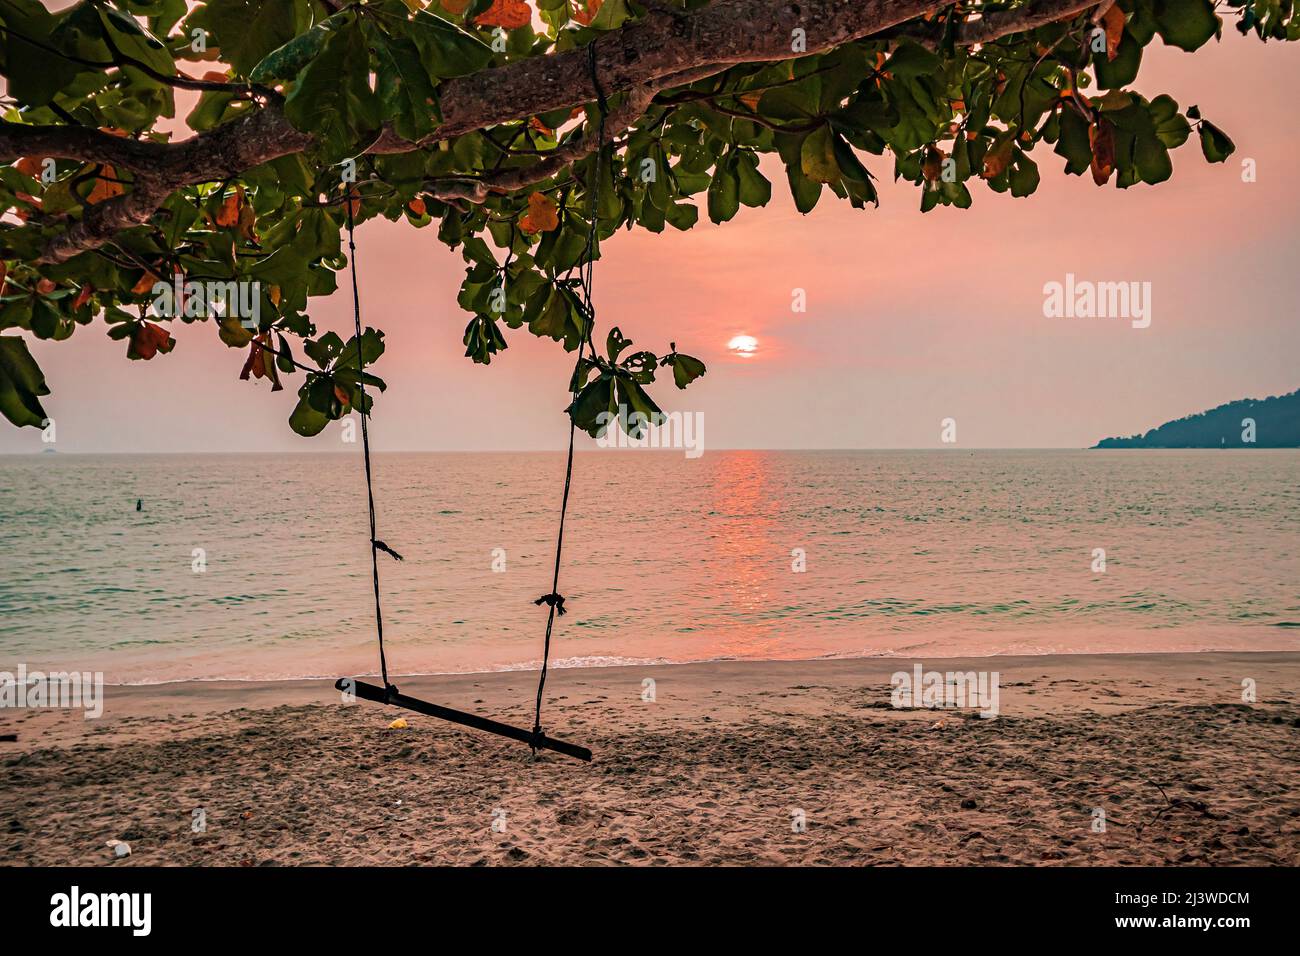 Silhouette of leafy Ketapang tree or beach almond tree (Terminalia catappa) with a swing hanging from it during sunset at Teluk Segari Beach, Malaysia. Stock Photo